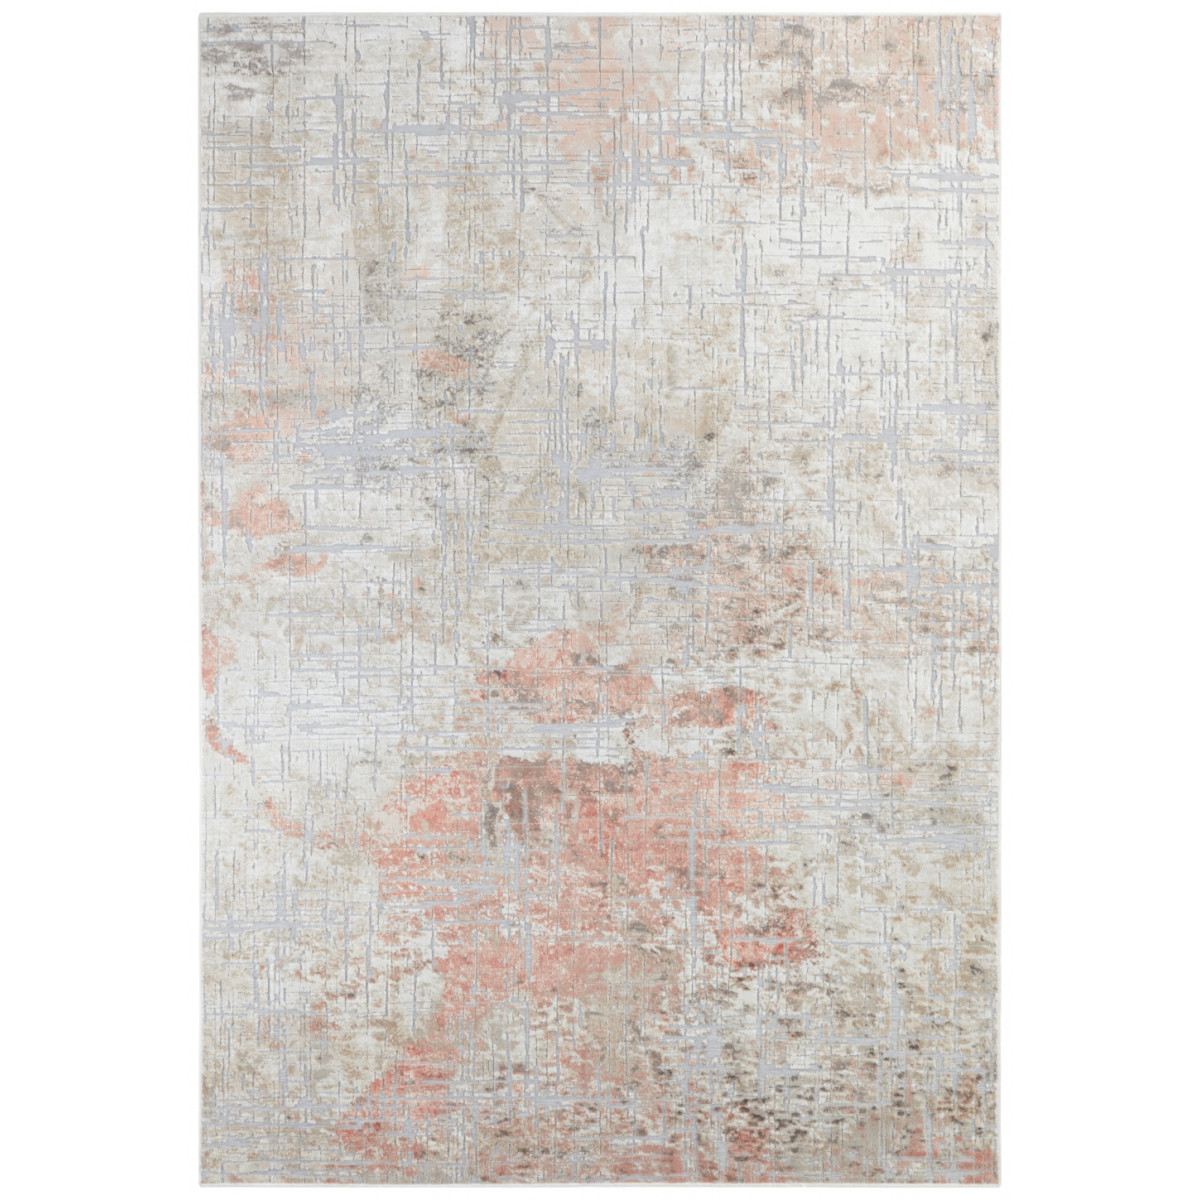 Kusový koberec Maywand 105061 Beige, Peach z kolekce Elle